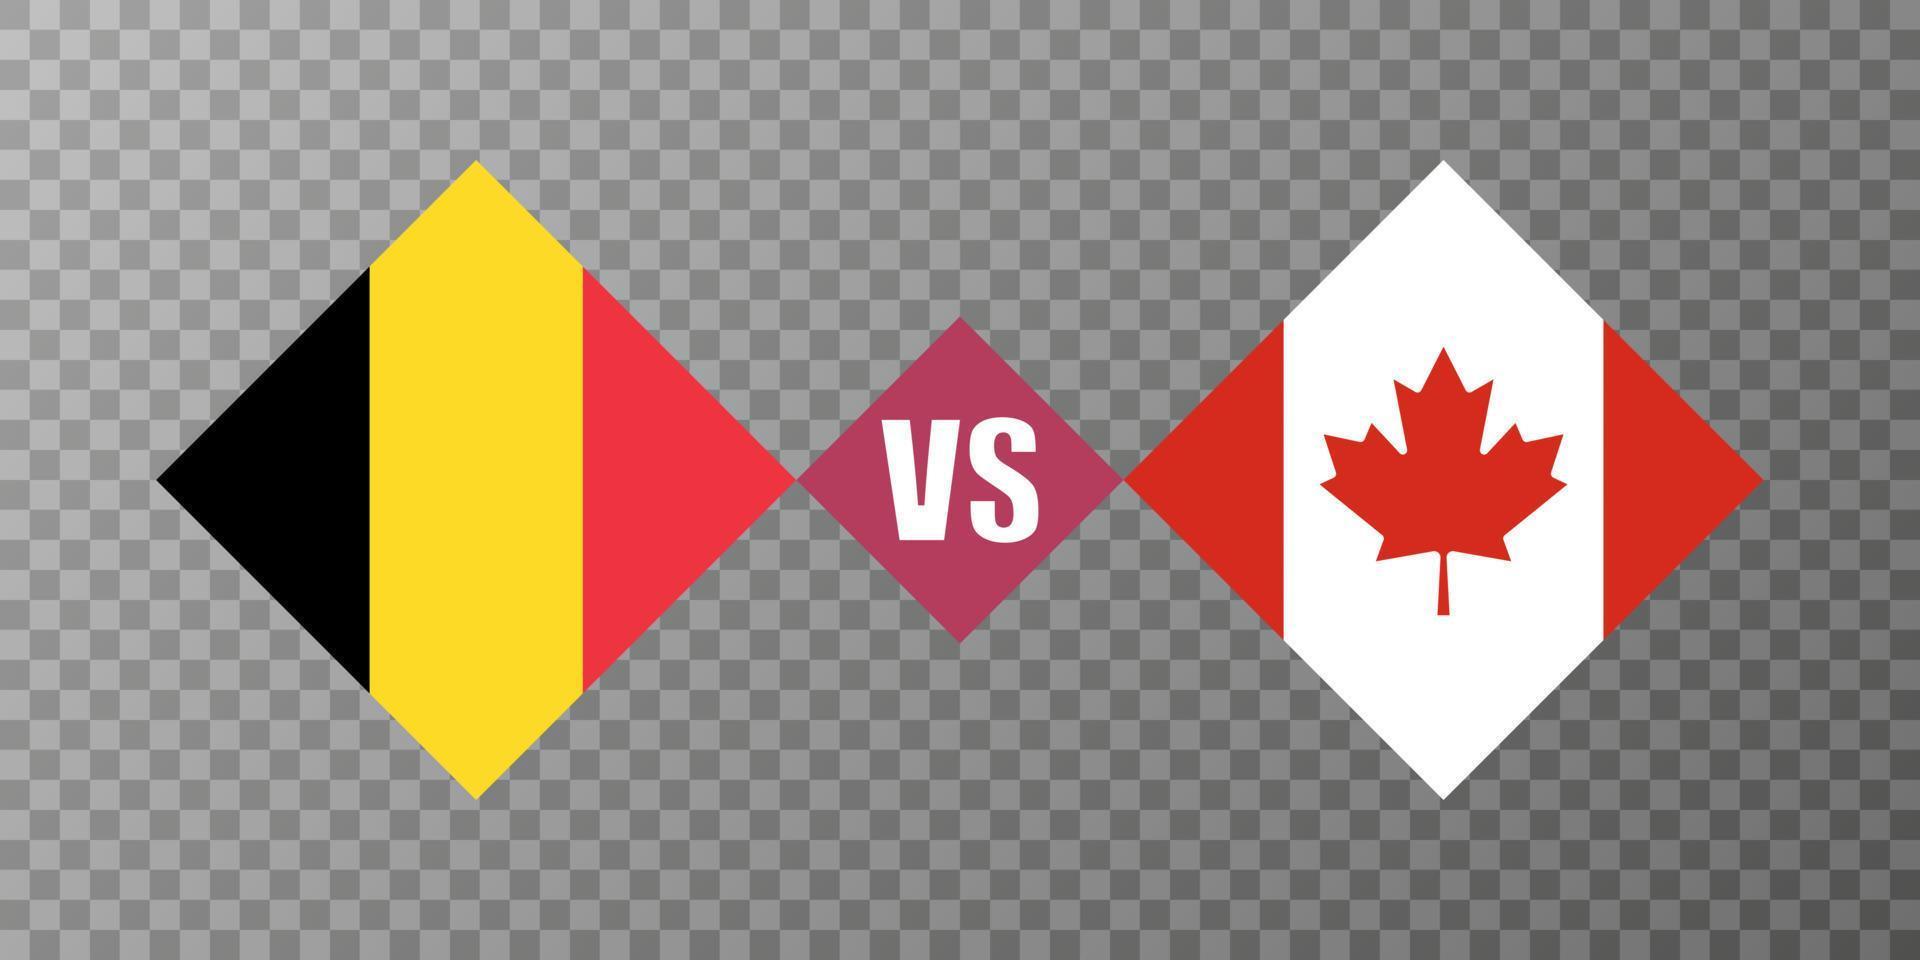 Belgium vs Canada flag concept. Vector illustration.